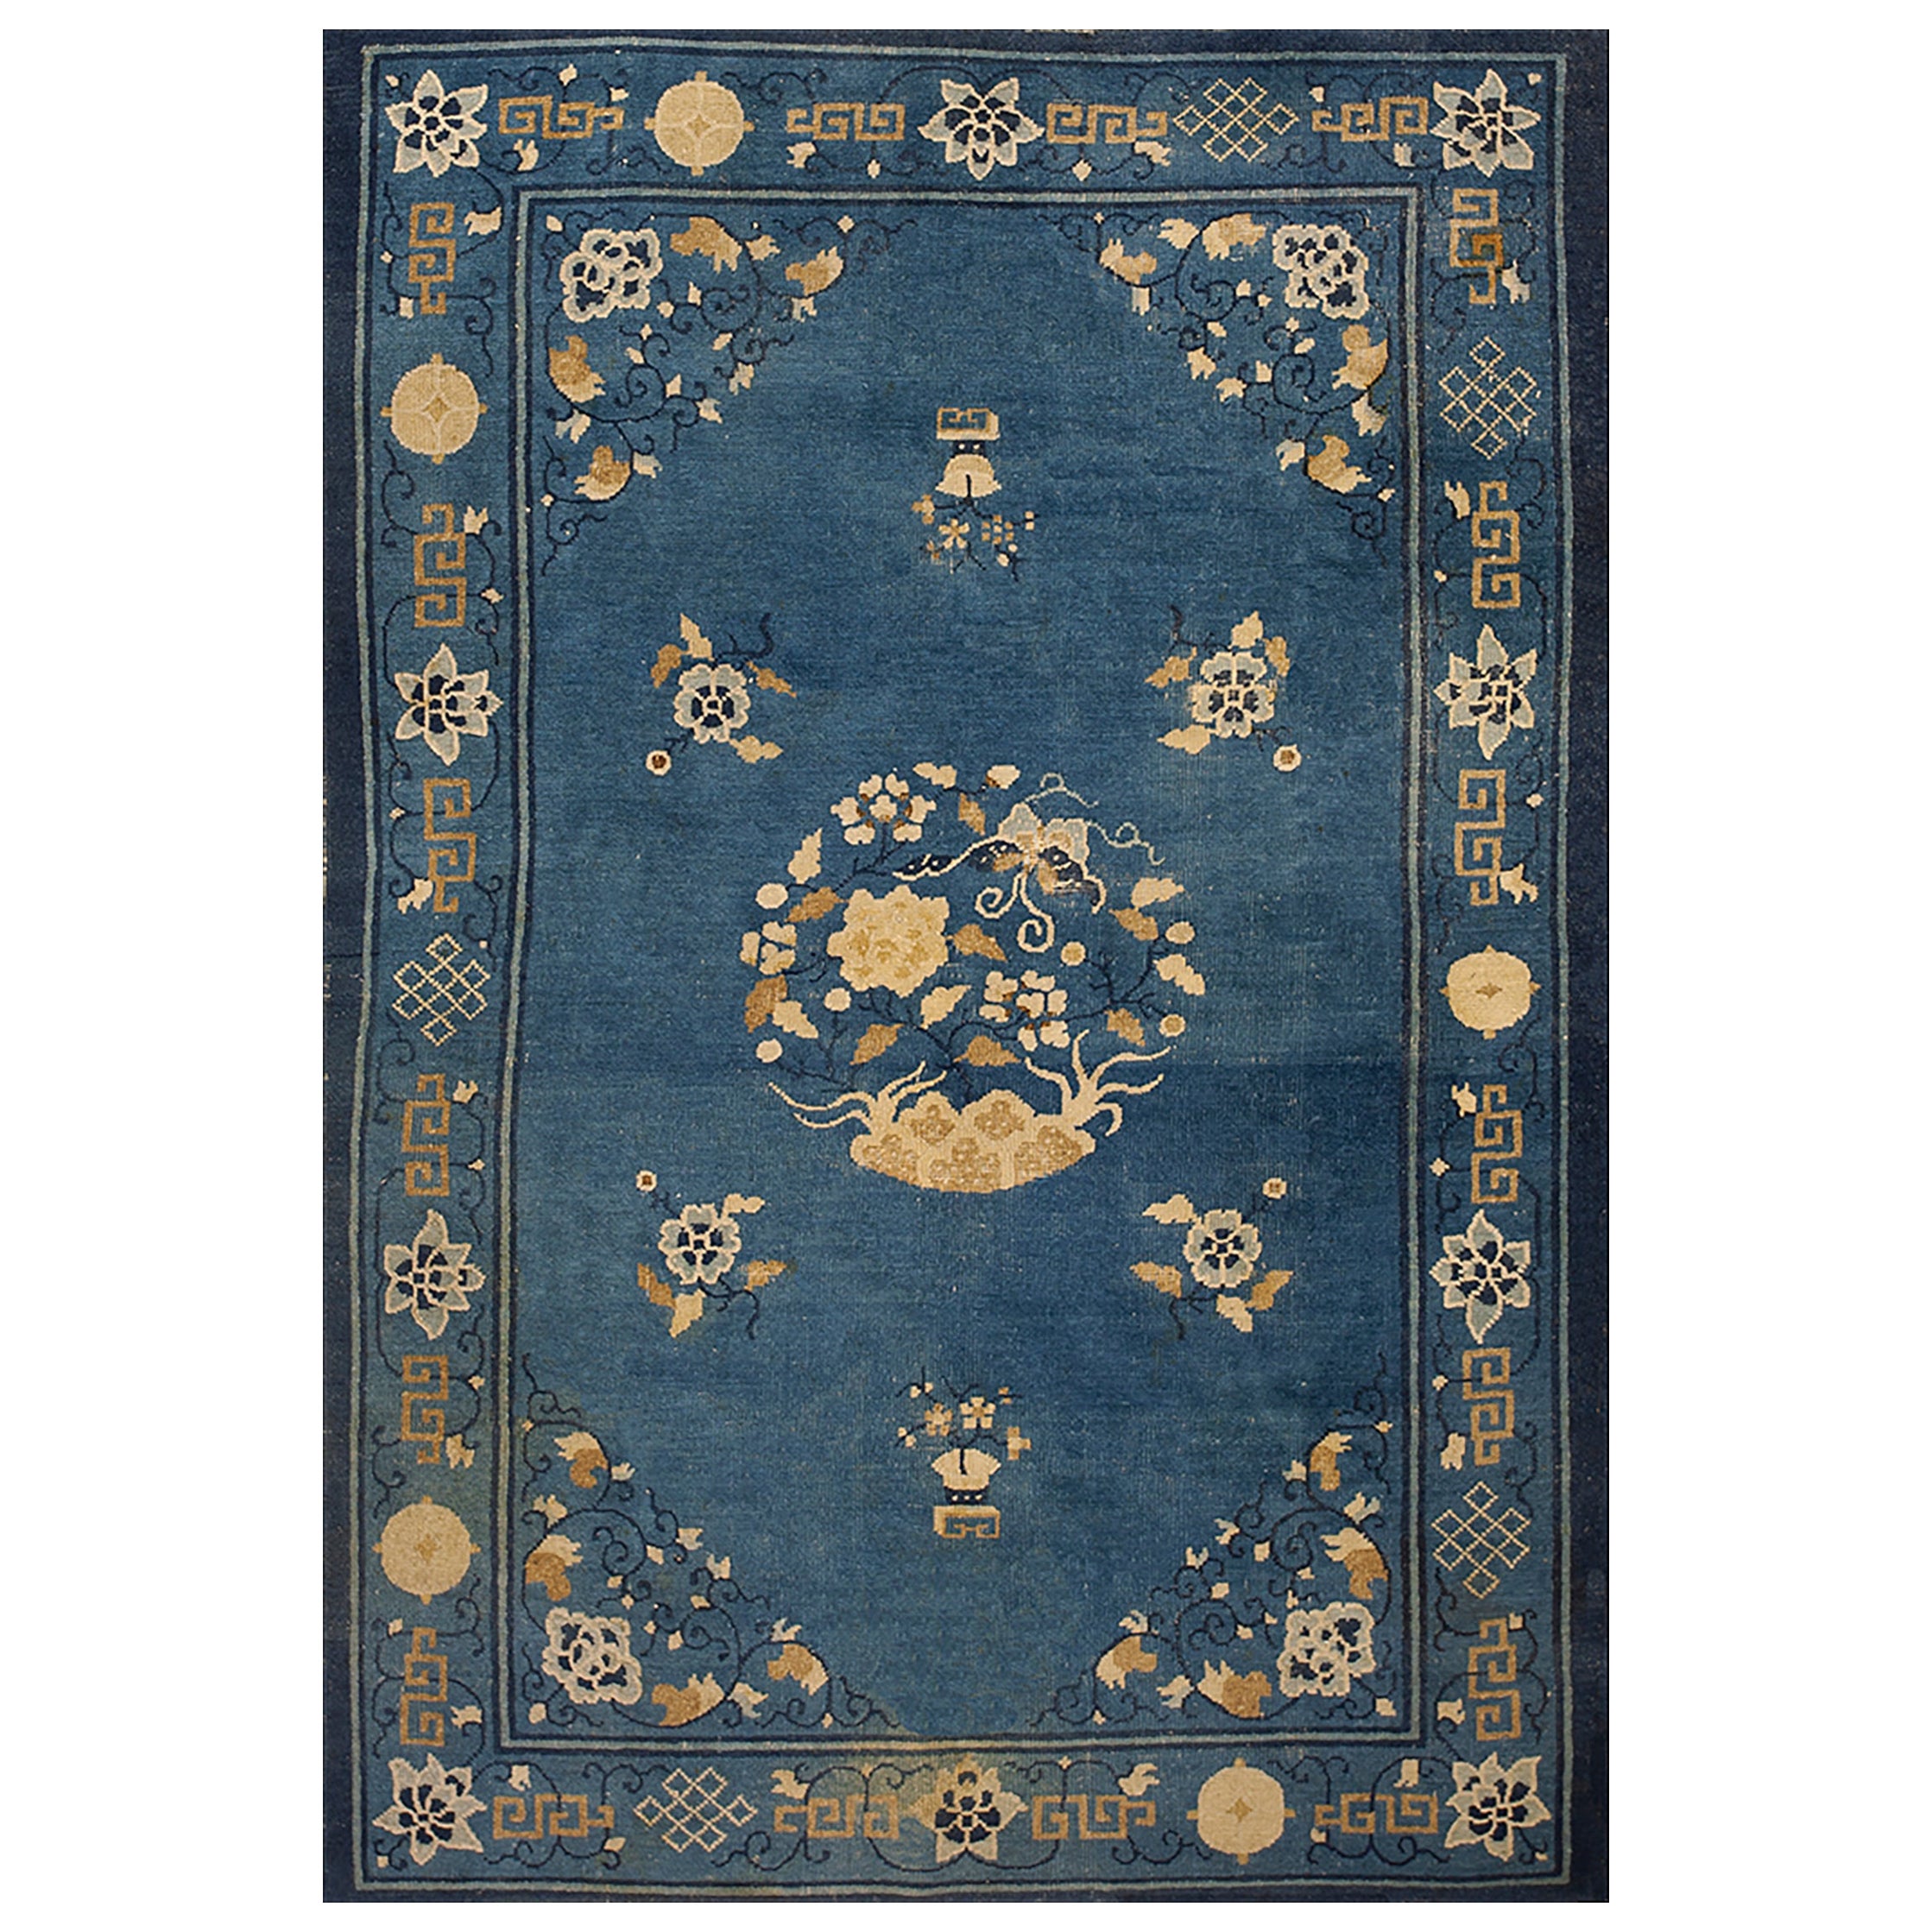 Early 20th Century Chinese Peking Carpet ( 4' x 5'10'' - 122 x 178 )